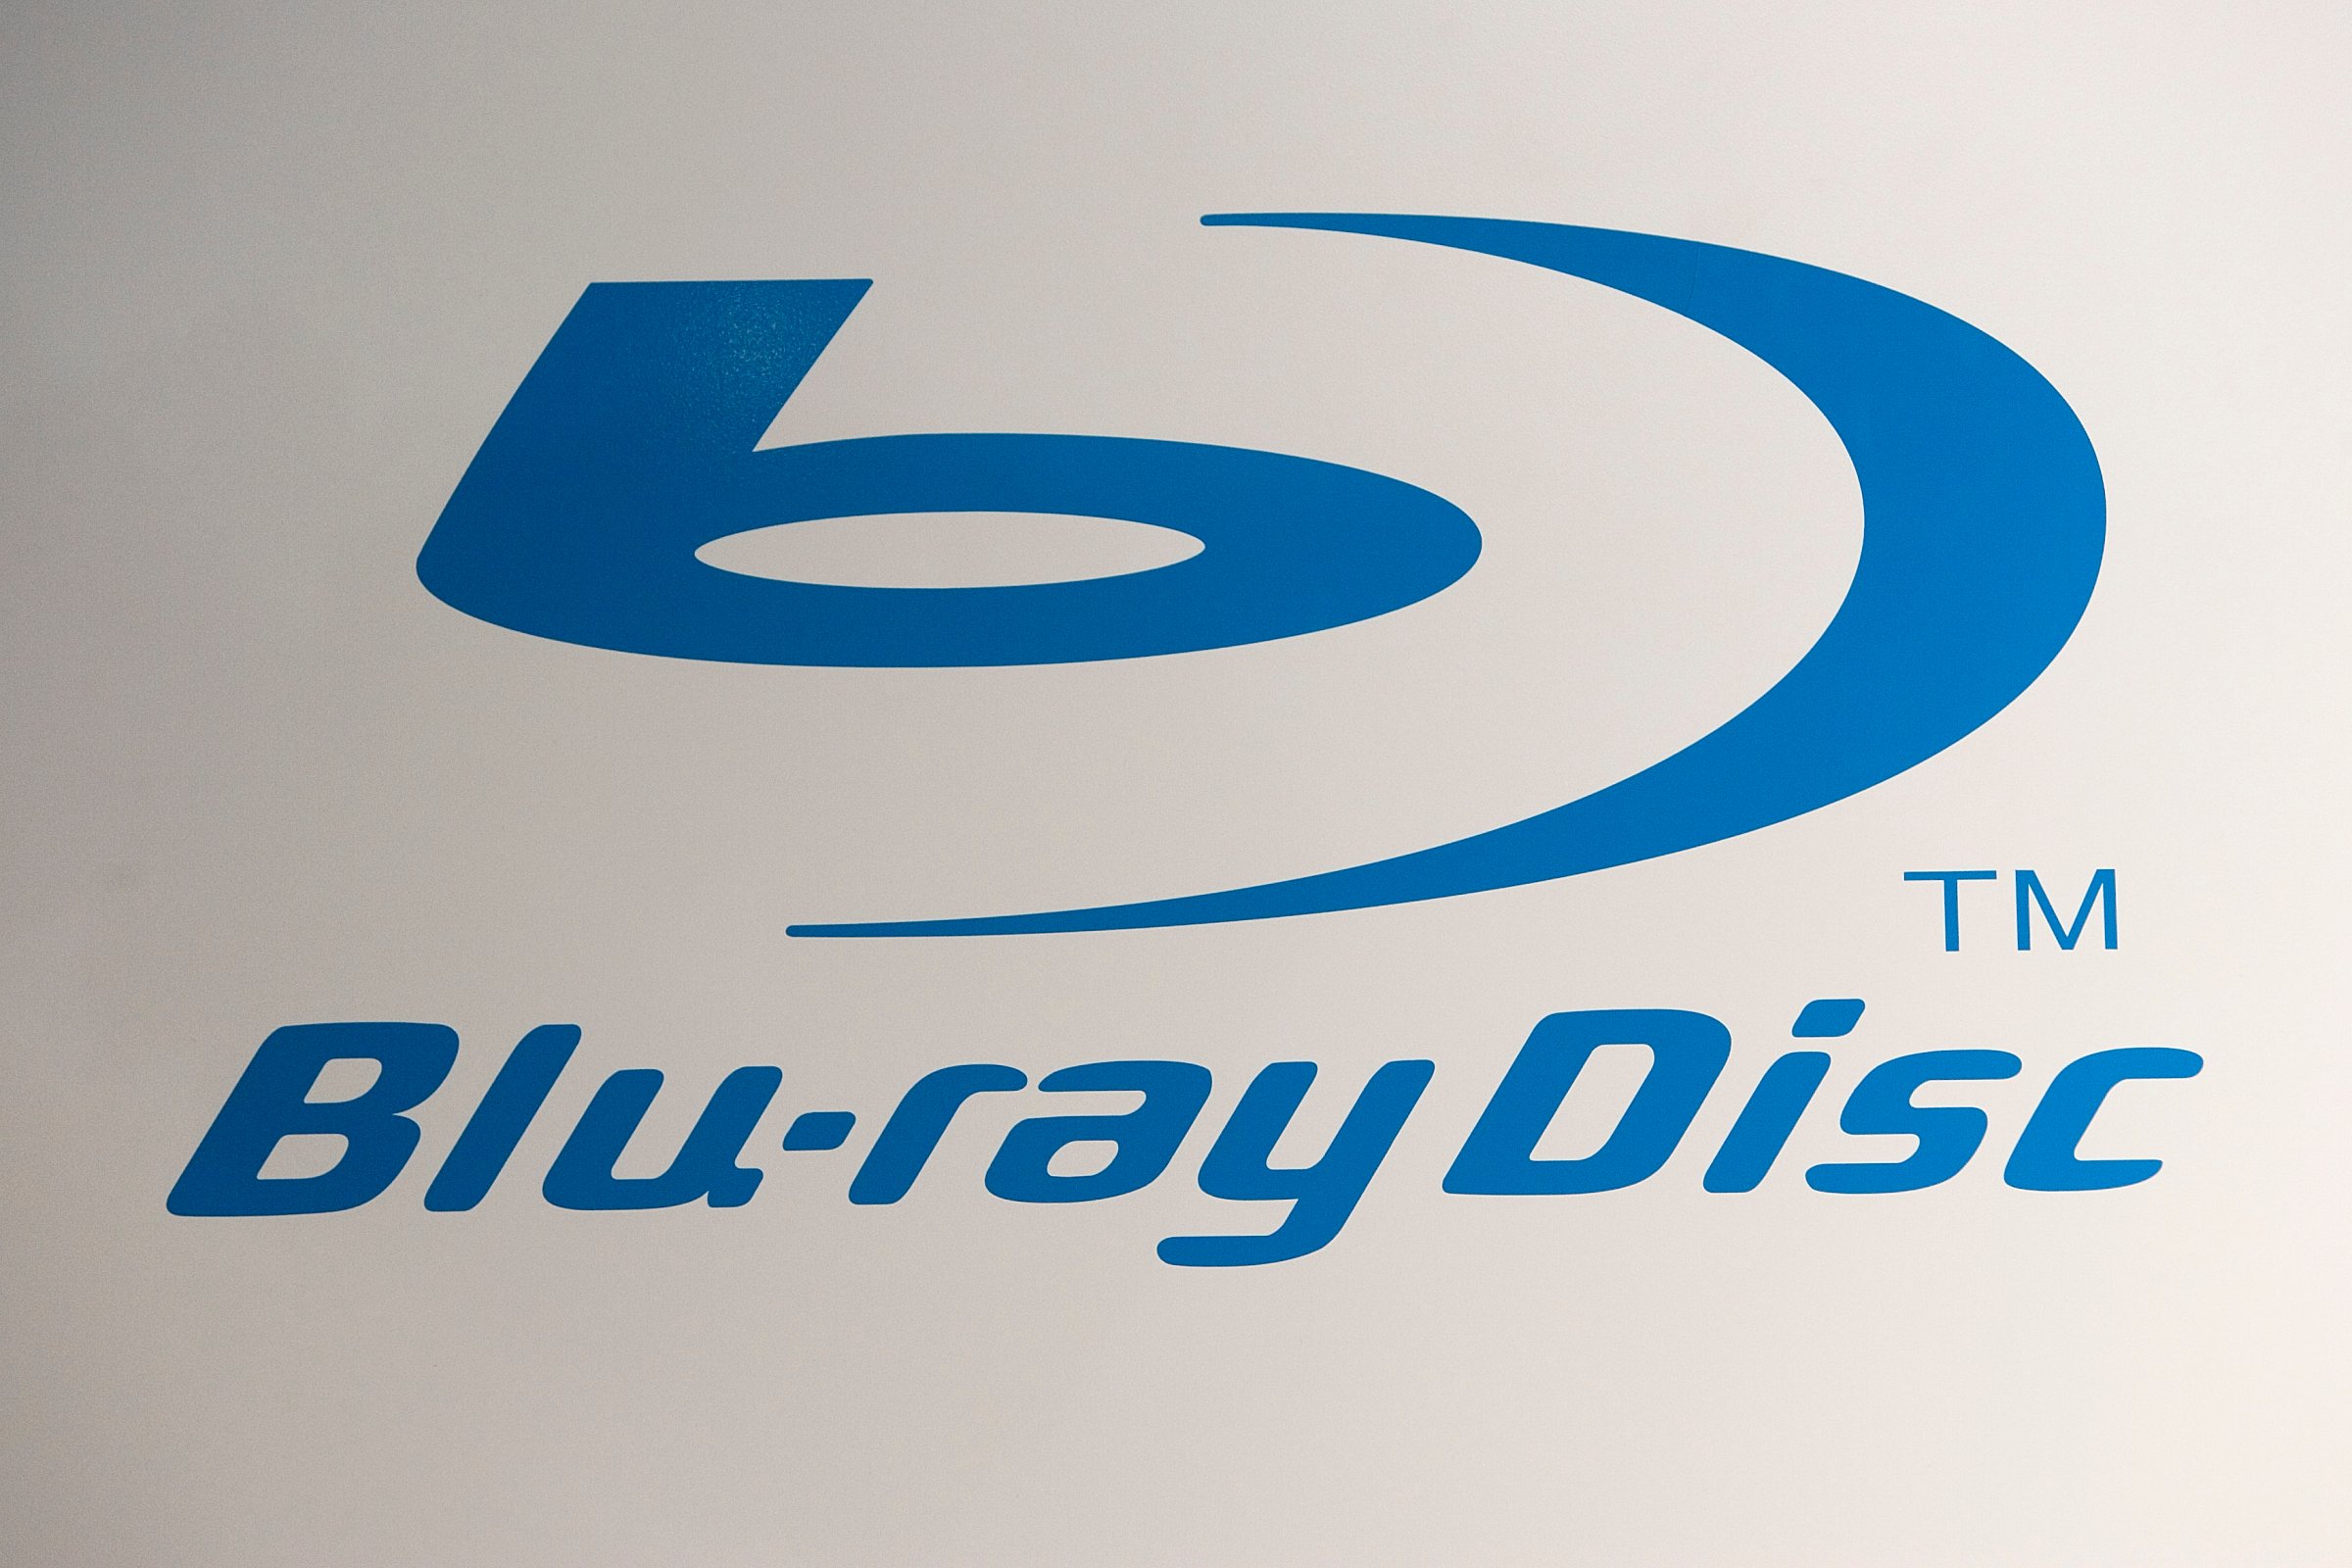 Blu-ray disk logo.